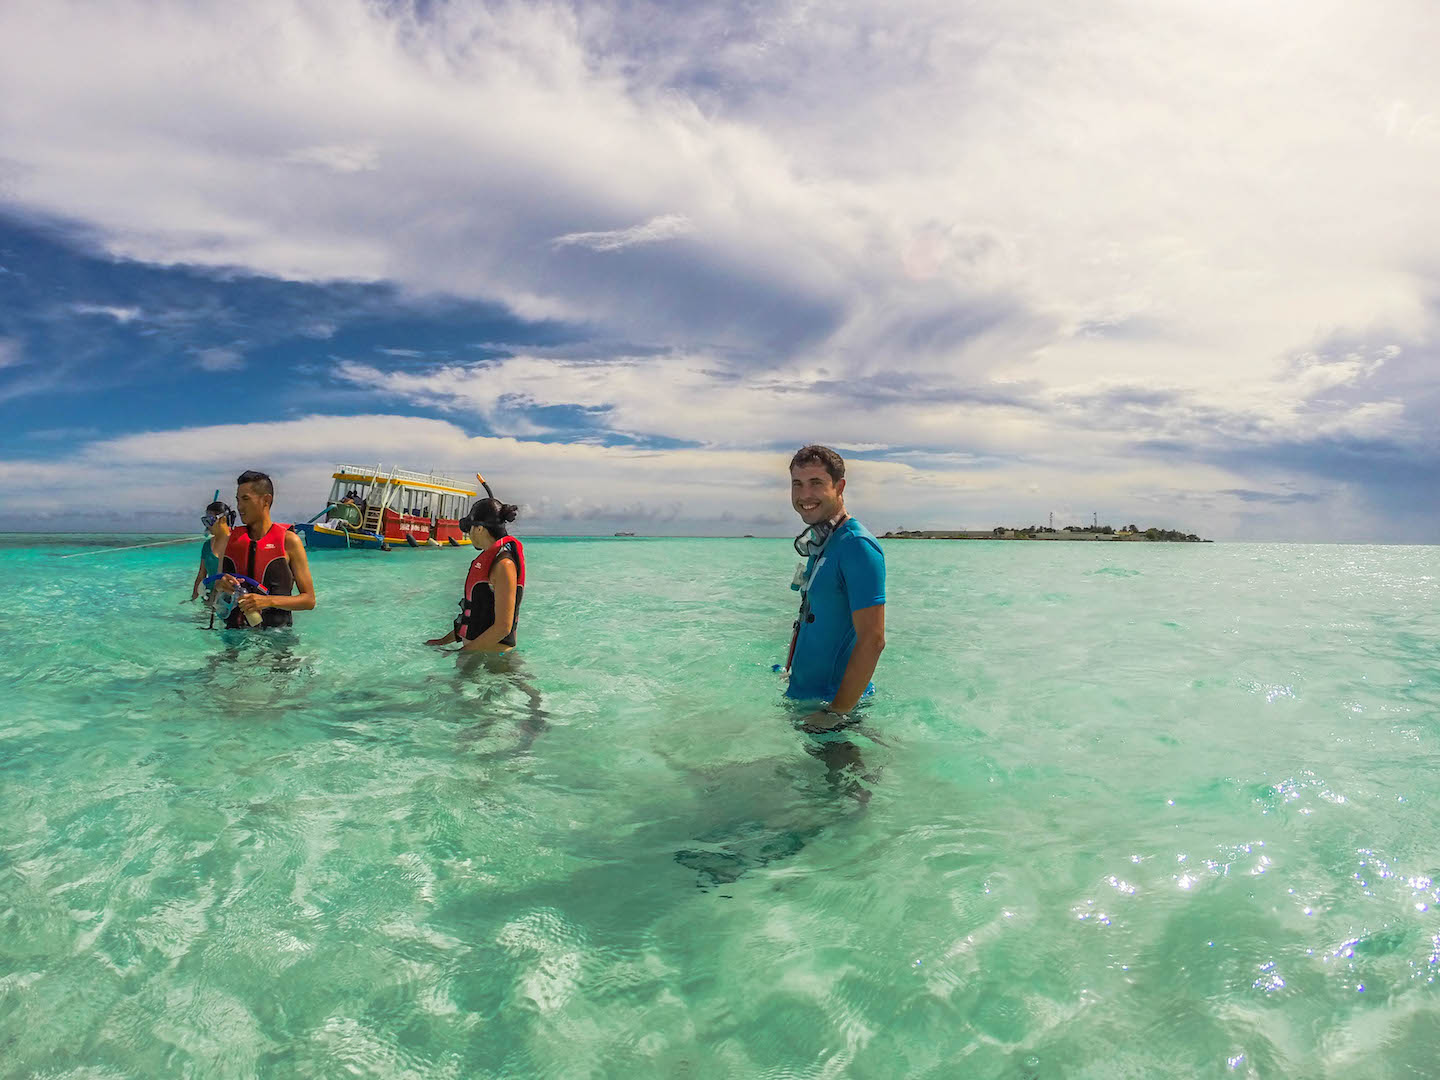 Carlos getting ready to snorkel, Maafushi, Maldives